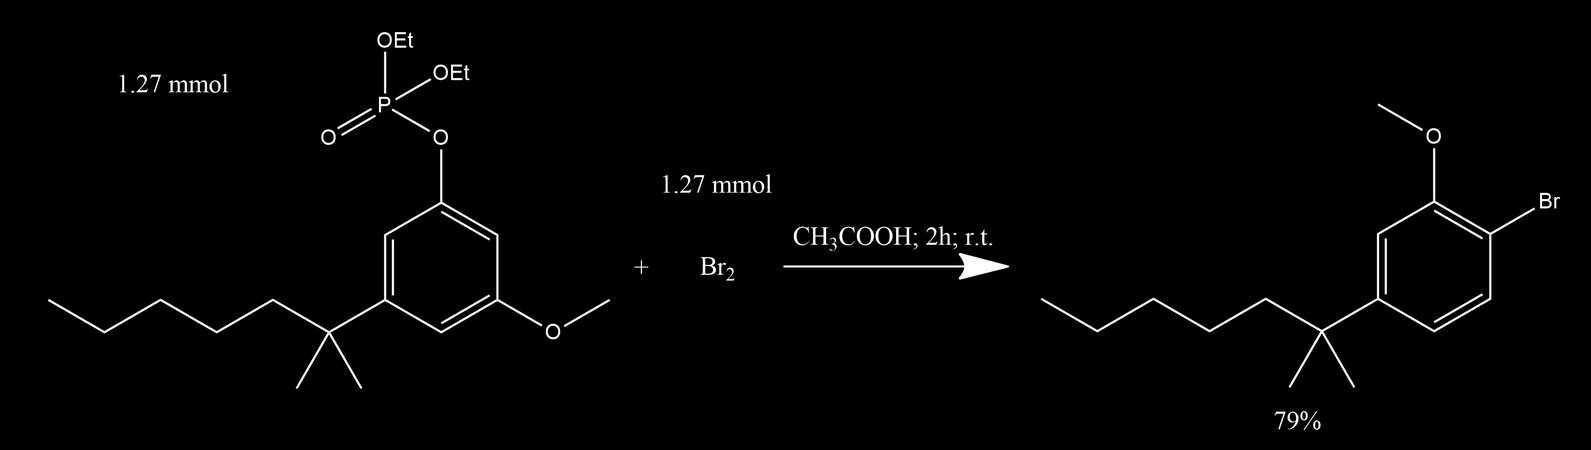 Synthesis of СР-47,497 2-4-Bromo-3-methoxyphenyl-2-methylheptane.jpg